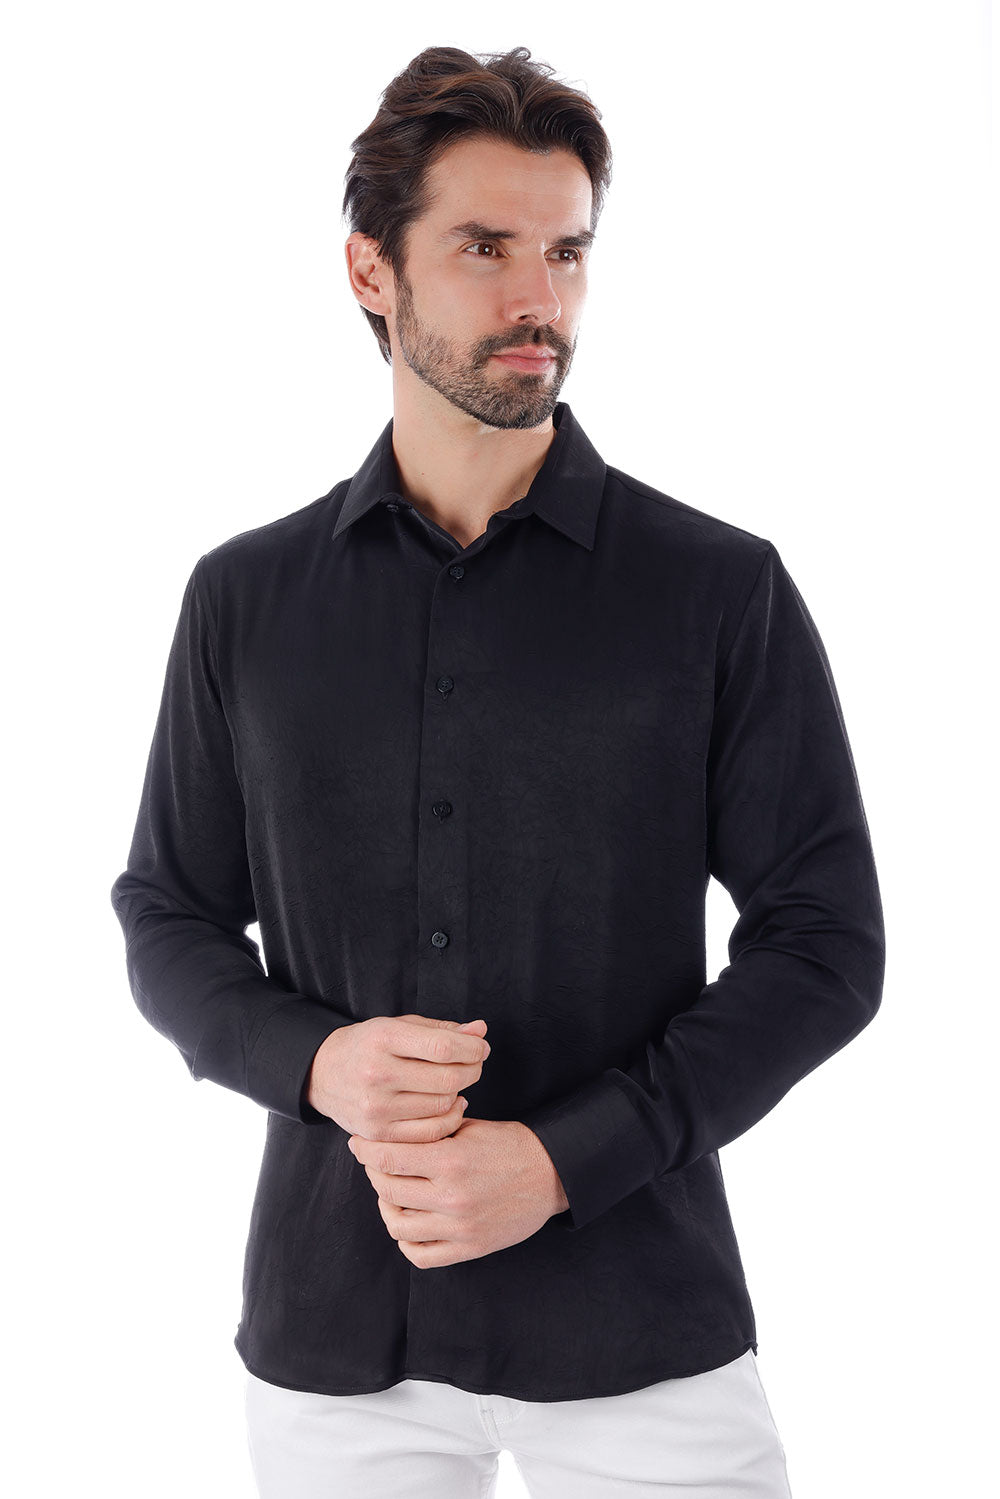 BARABAS Men's Textured Stretch Button Down Long Sleeve Shirt 4B34 Black